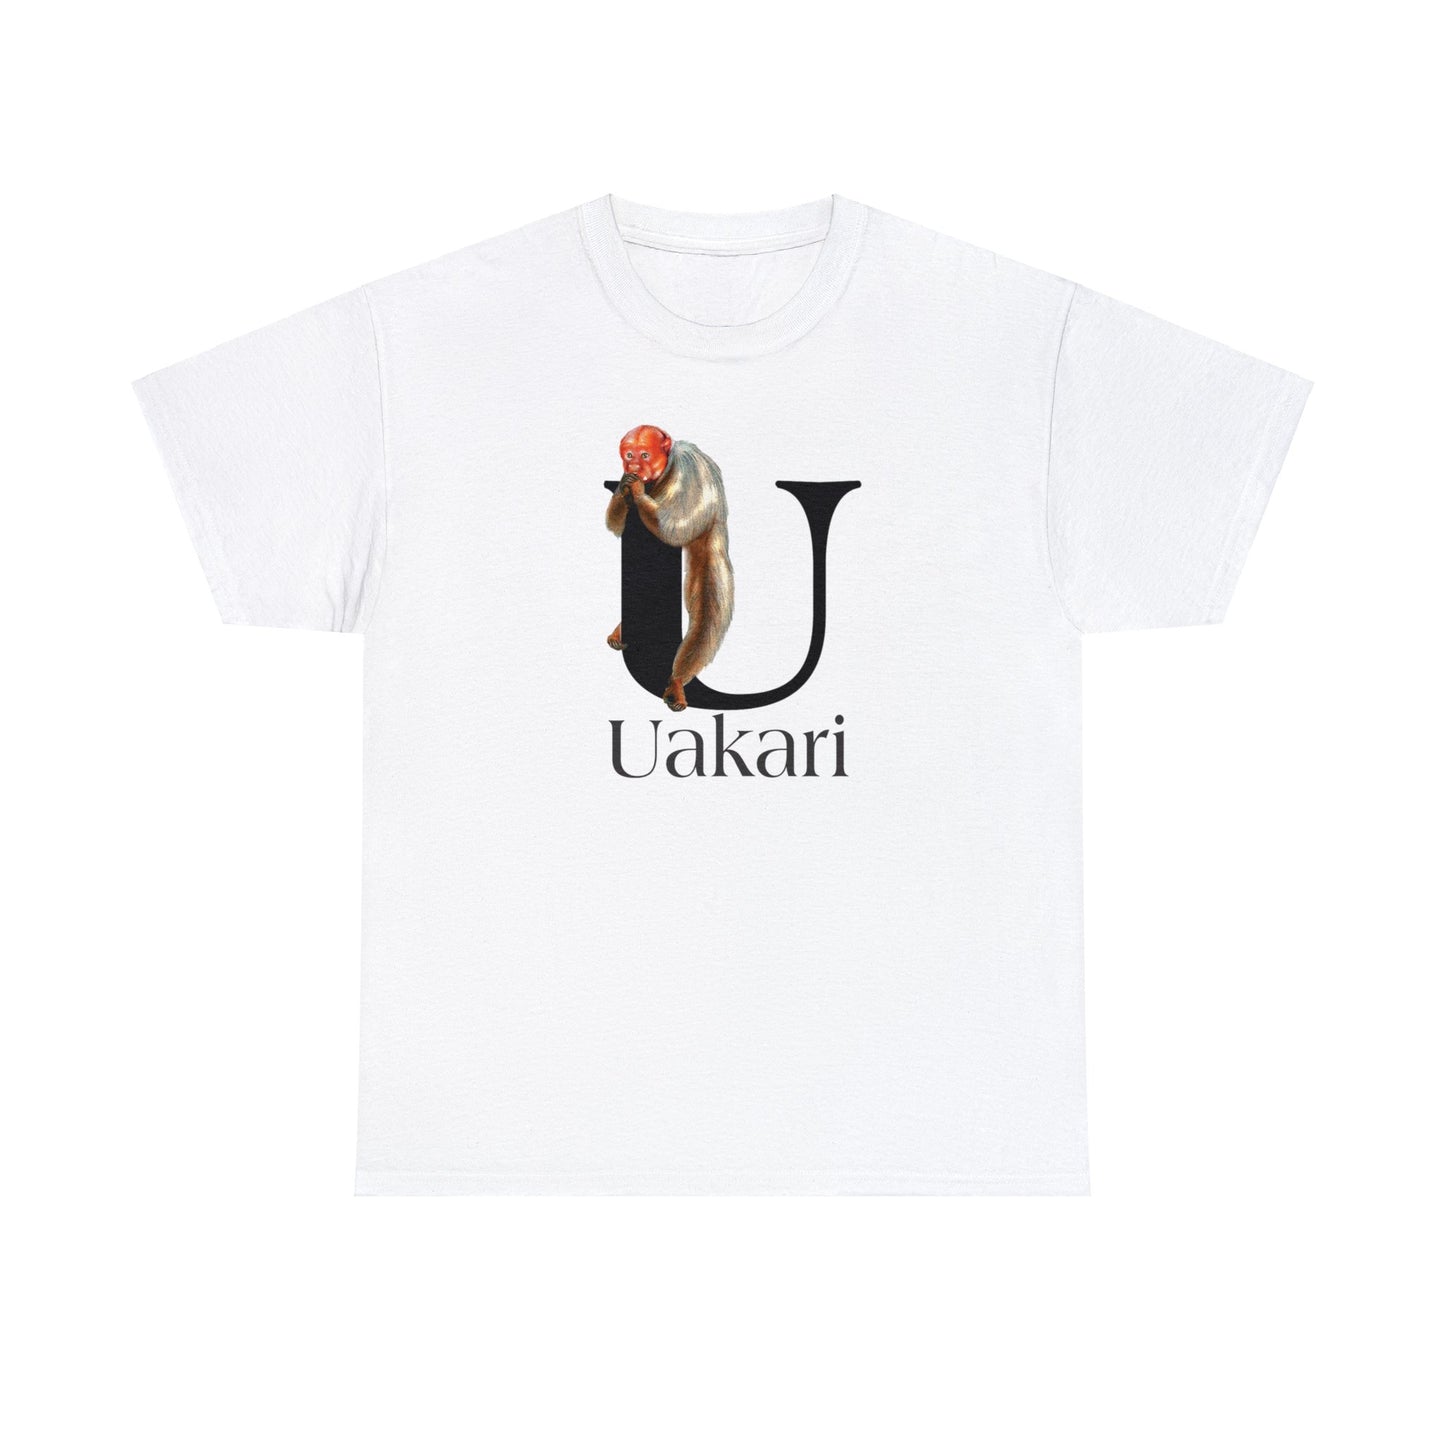 U is for Uakari Monkey, Uacari monkey Drawing, Uakari T-Shirt, animal t-shirt, animal